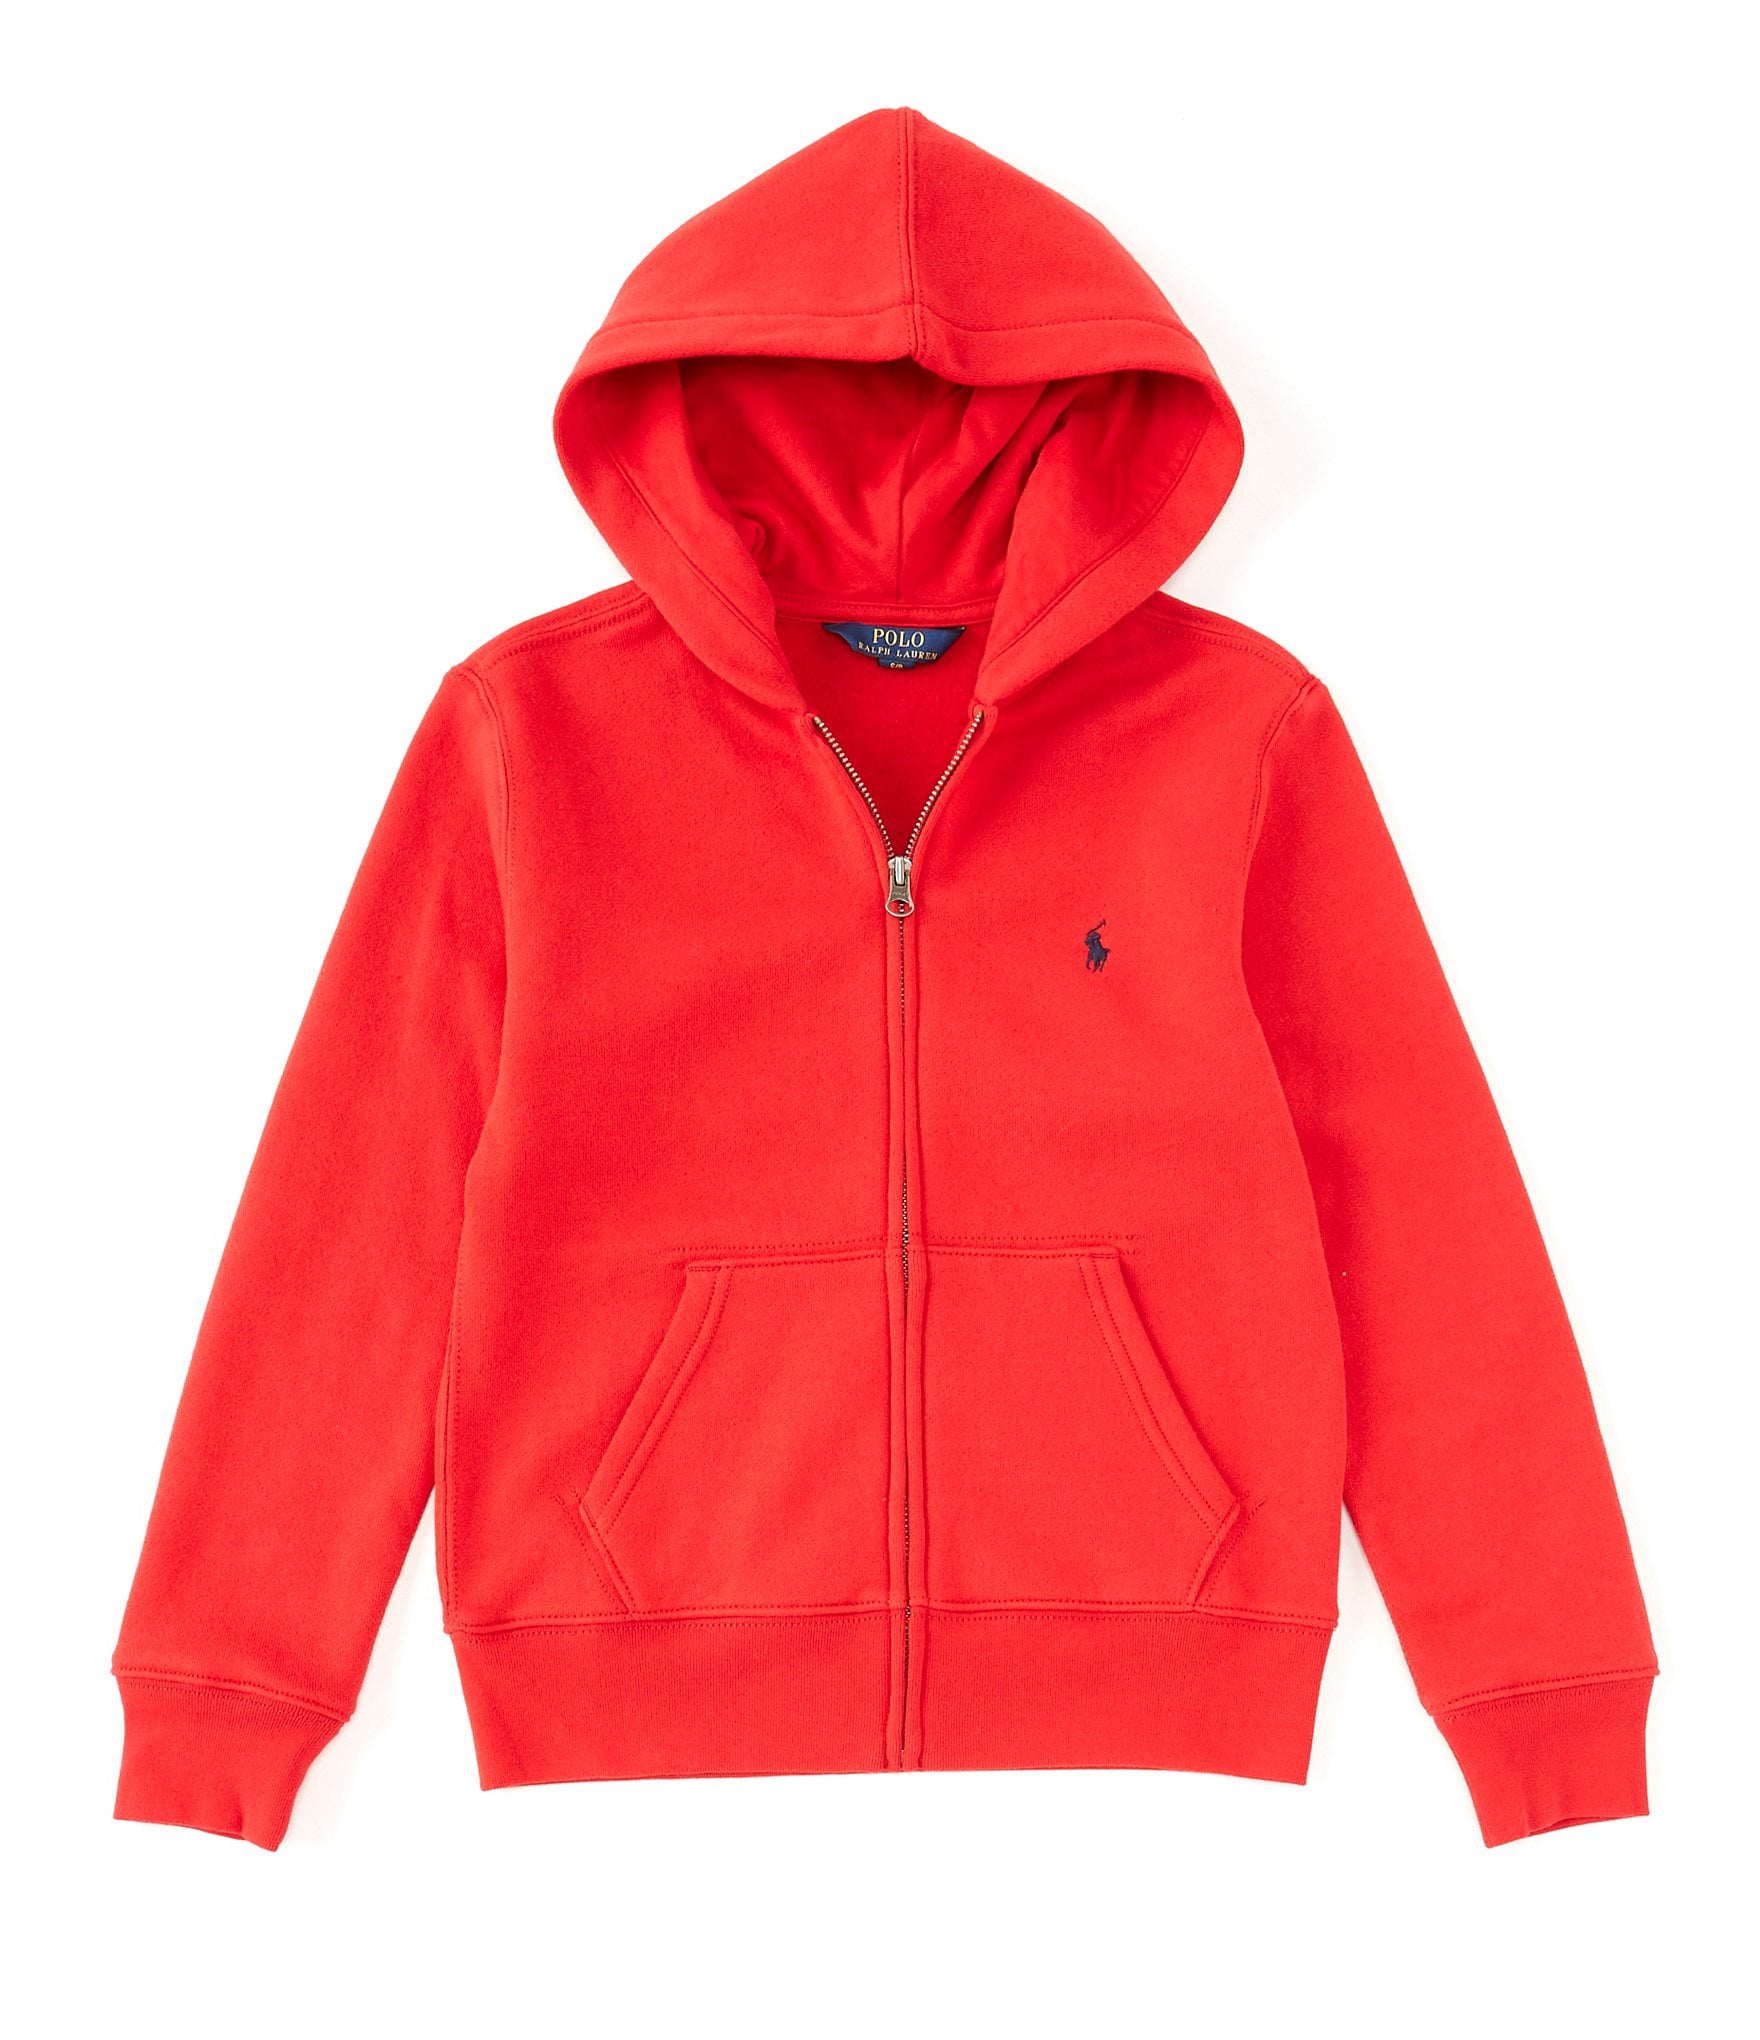 Kids Boys Unisex Plain Fleece Red Hoodie Zip Up Style Zipper Age 2-13 Years